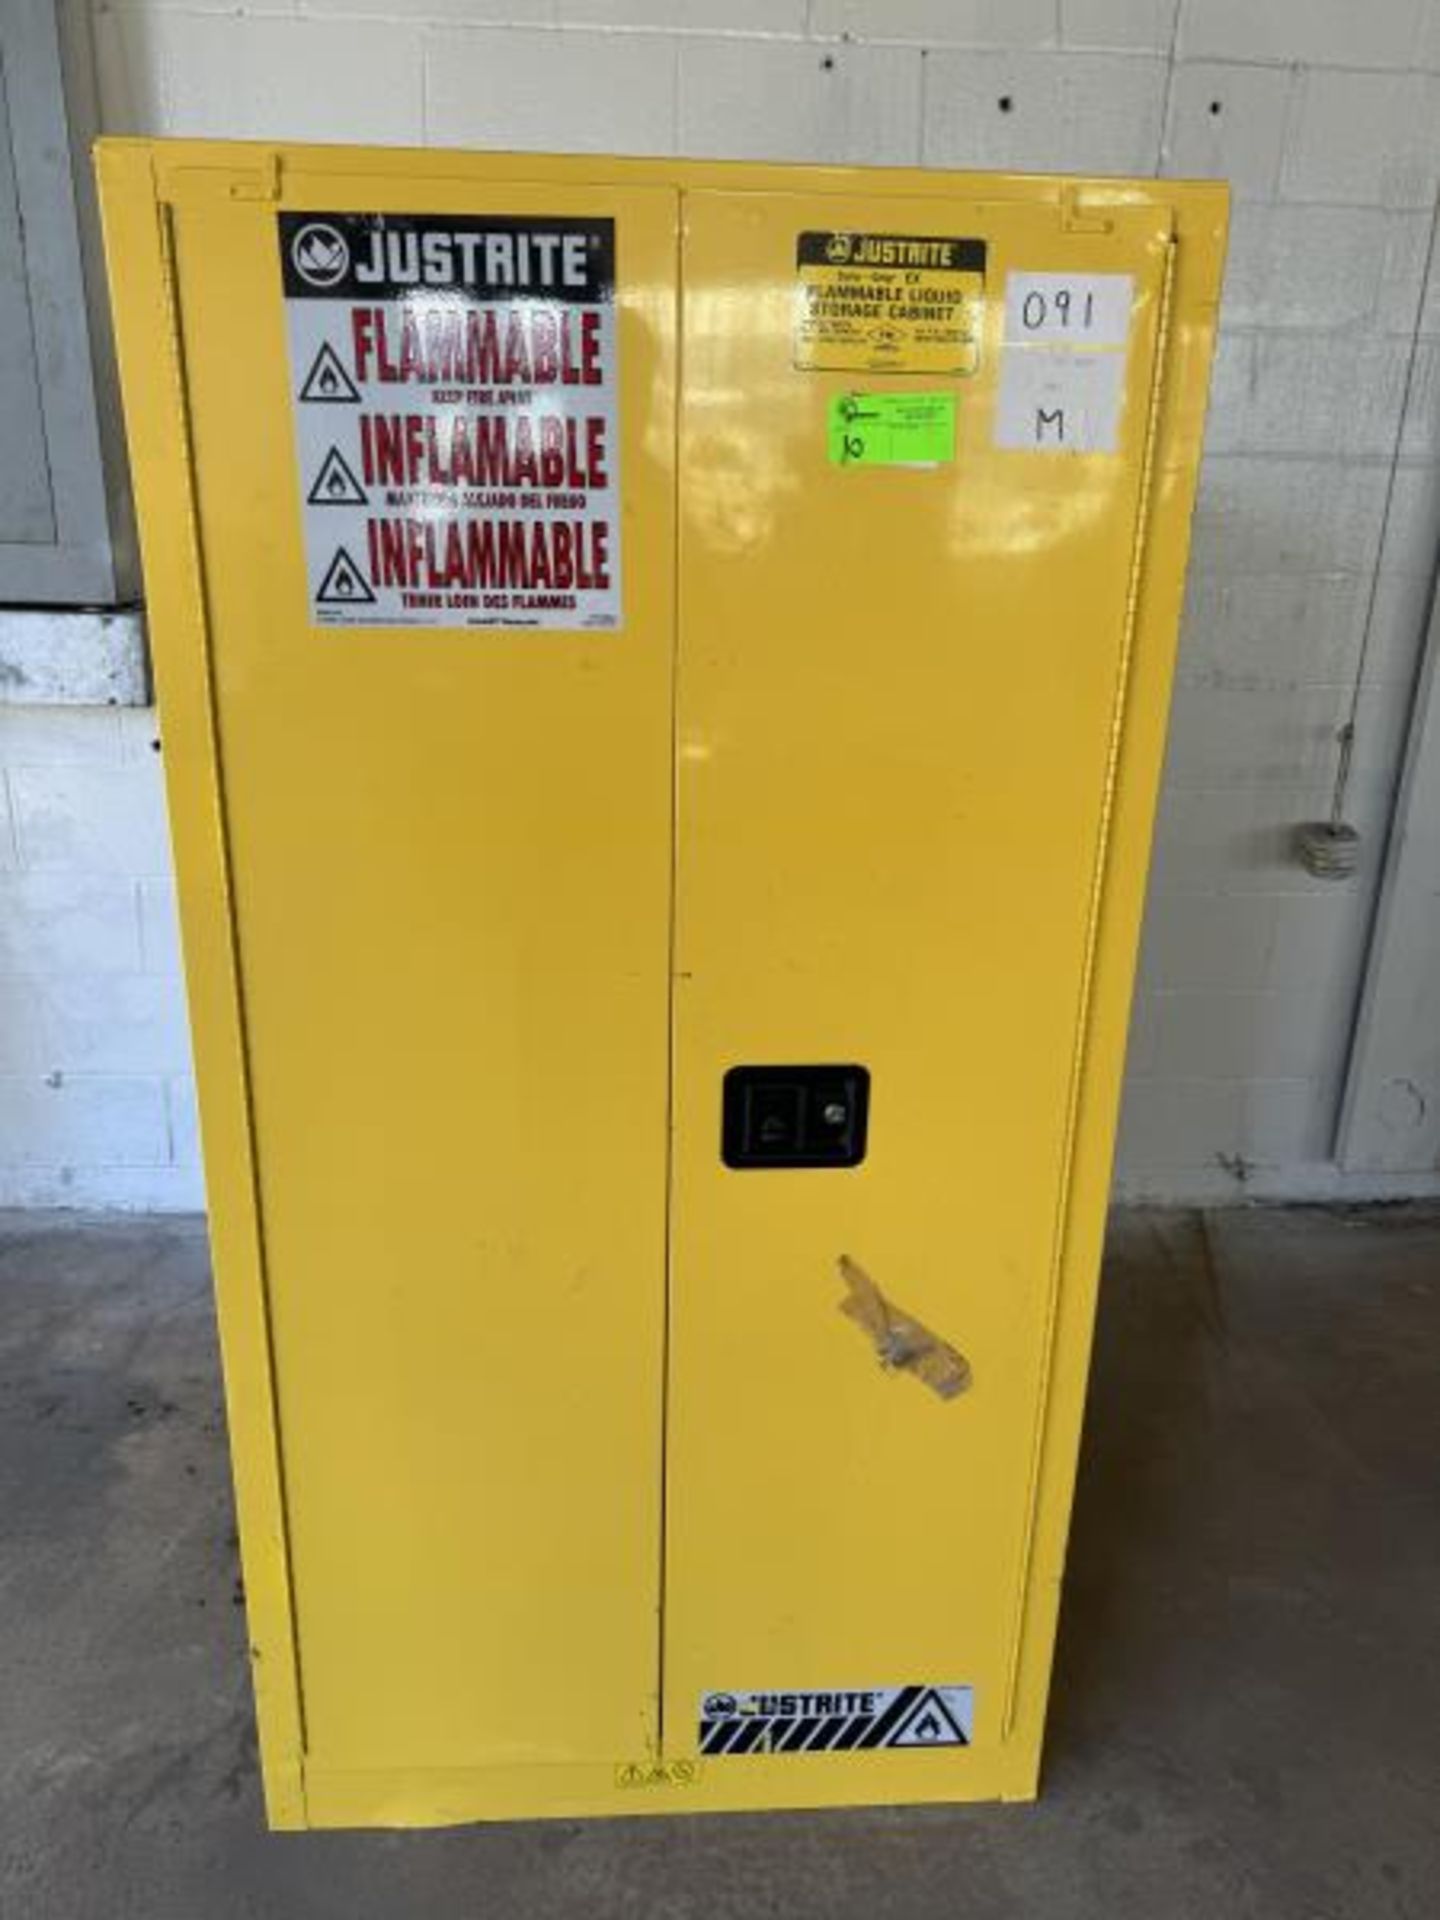 Justrite Flammable Liquid Storage Cabinet 34" Wide x 34" Deep x 66" Tall